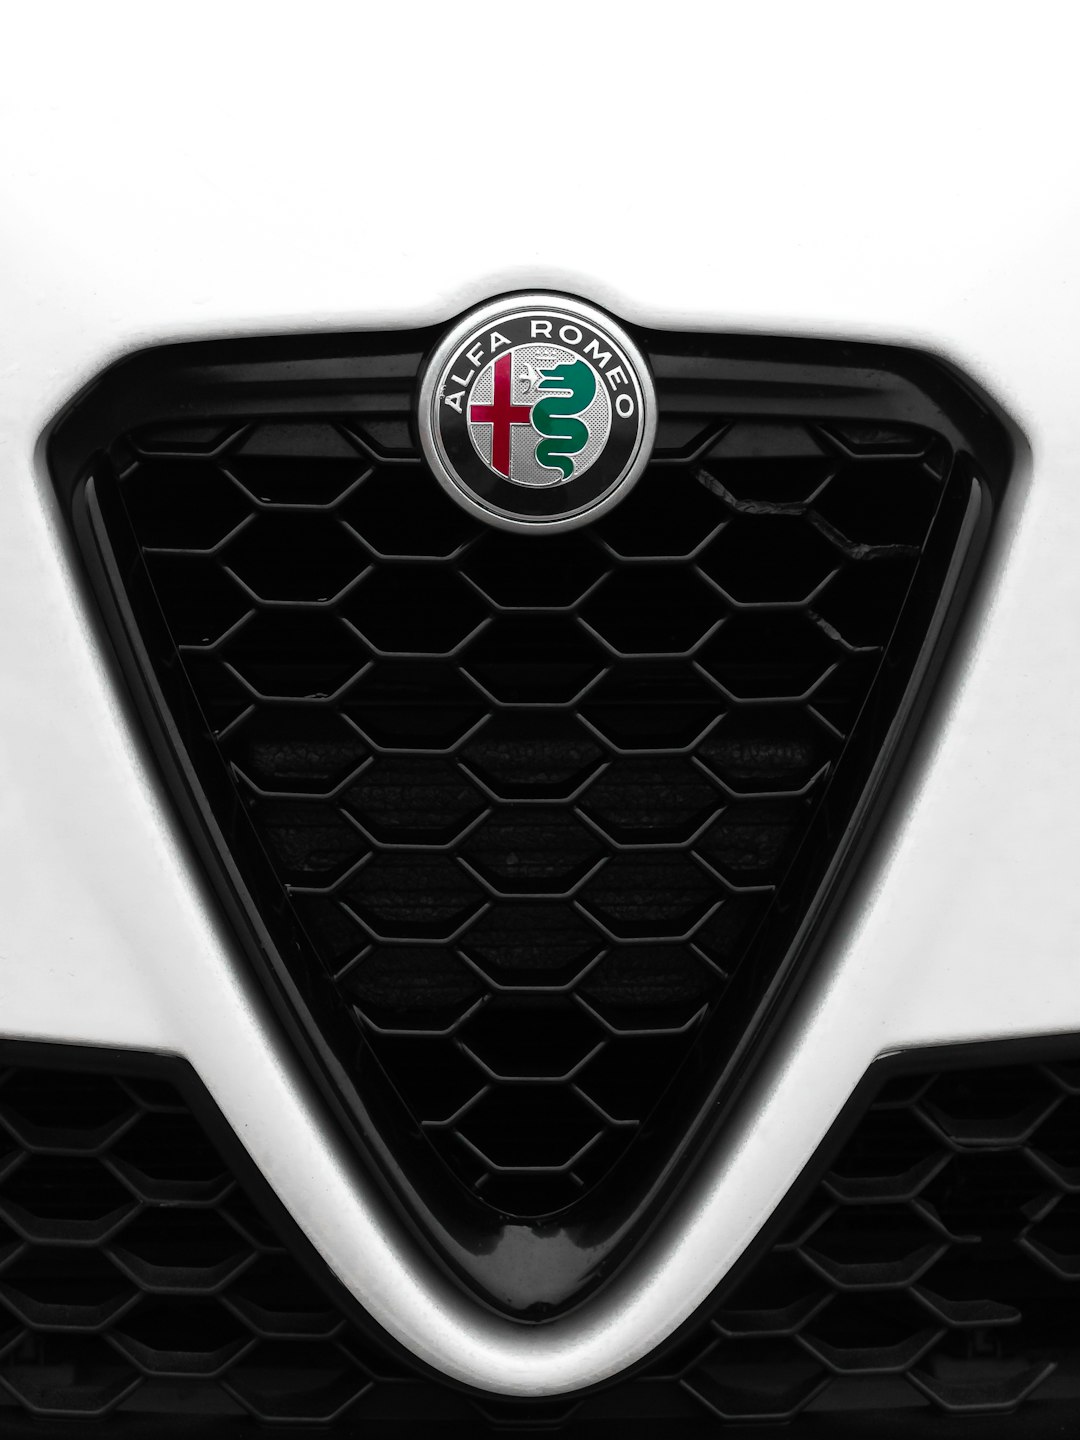 Alfa Romeo is a luxury Italian car manufacturer.